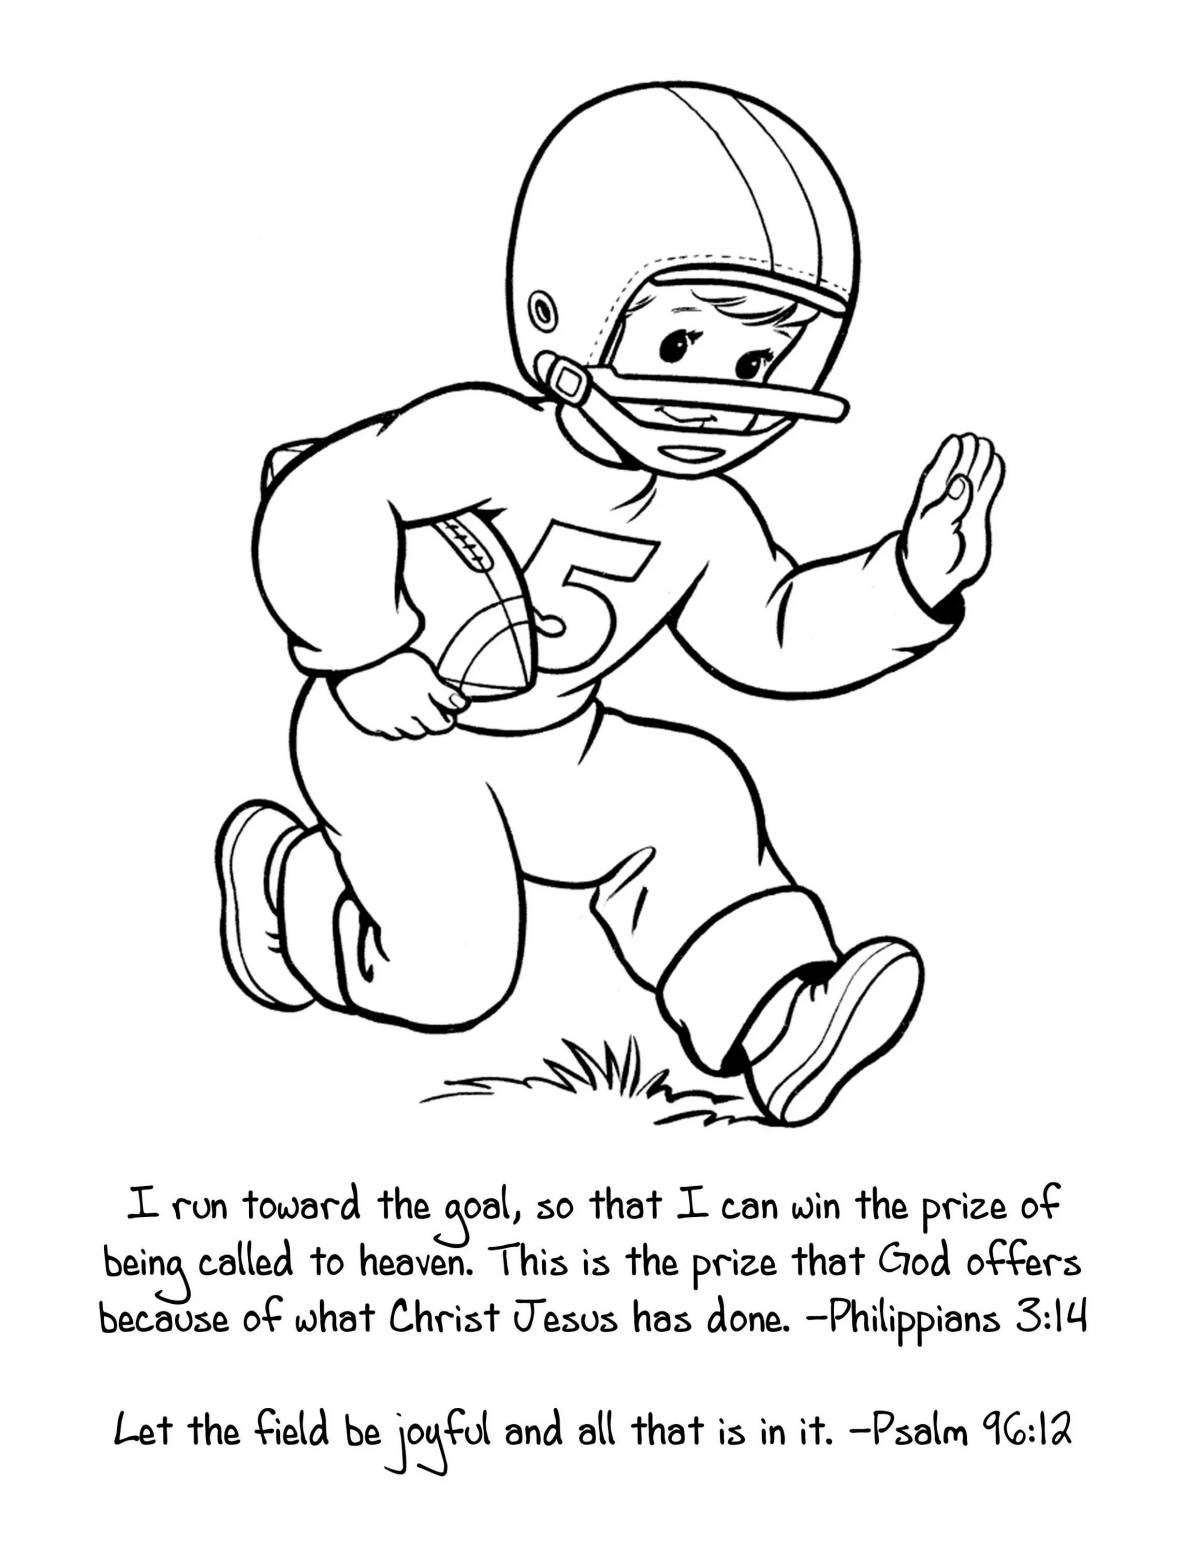 Creative sports coloring book for preschoolers